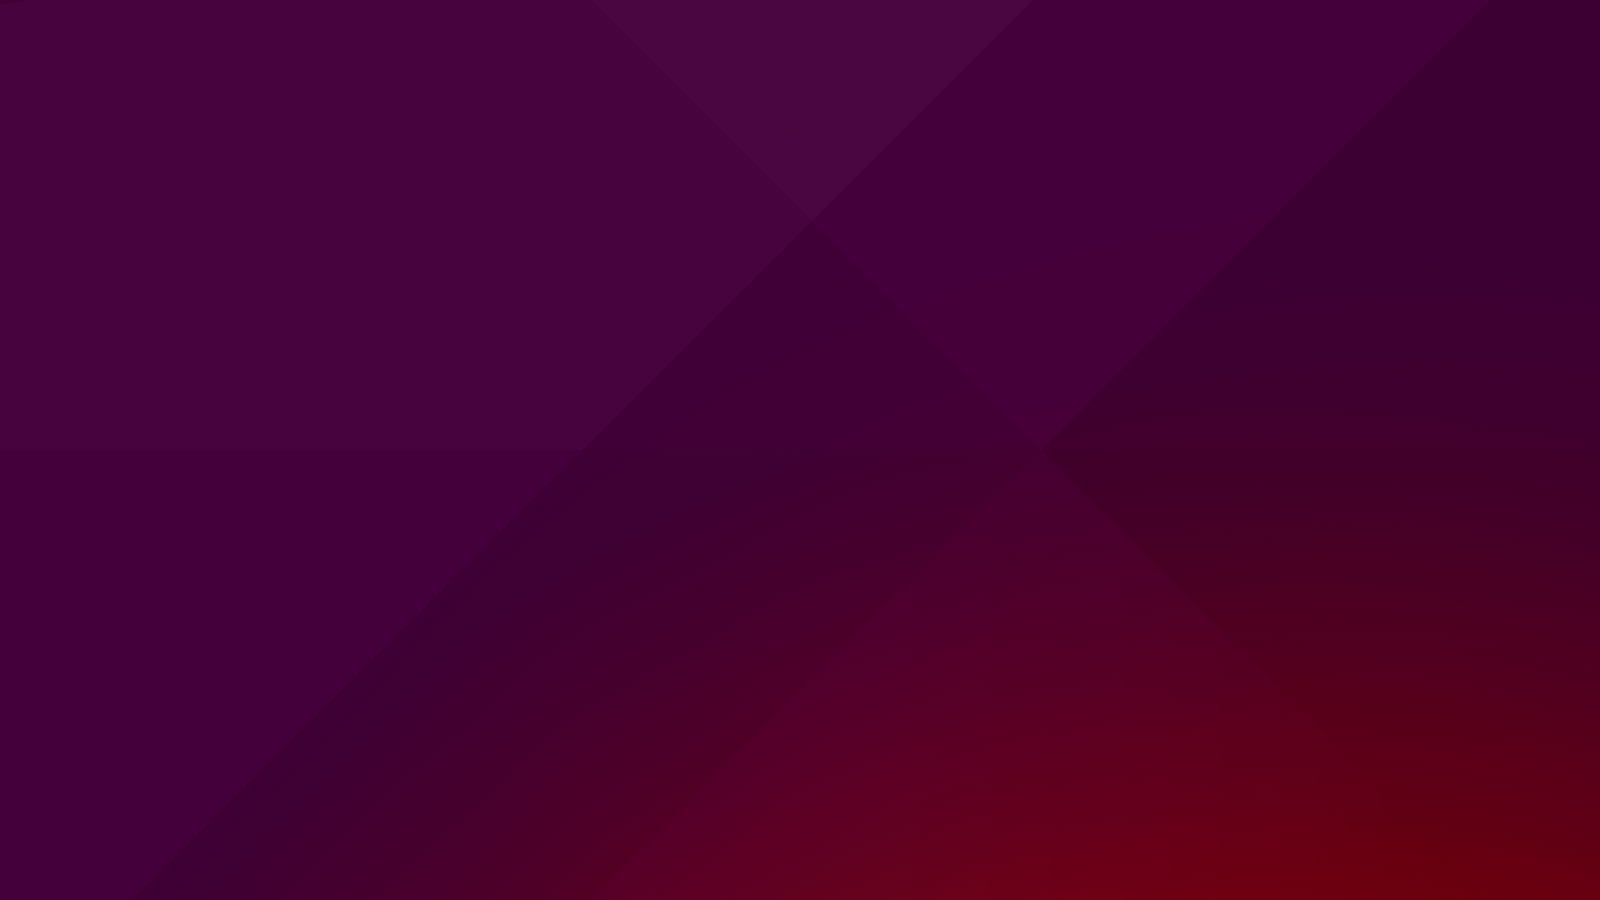 Ubuntu 15.04 Vivid Vervet Default Wallpaper Revealed ~ Web Upd8 ...